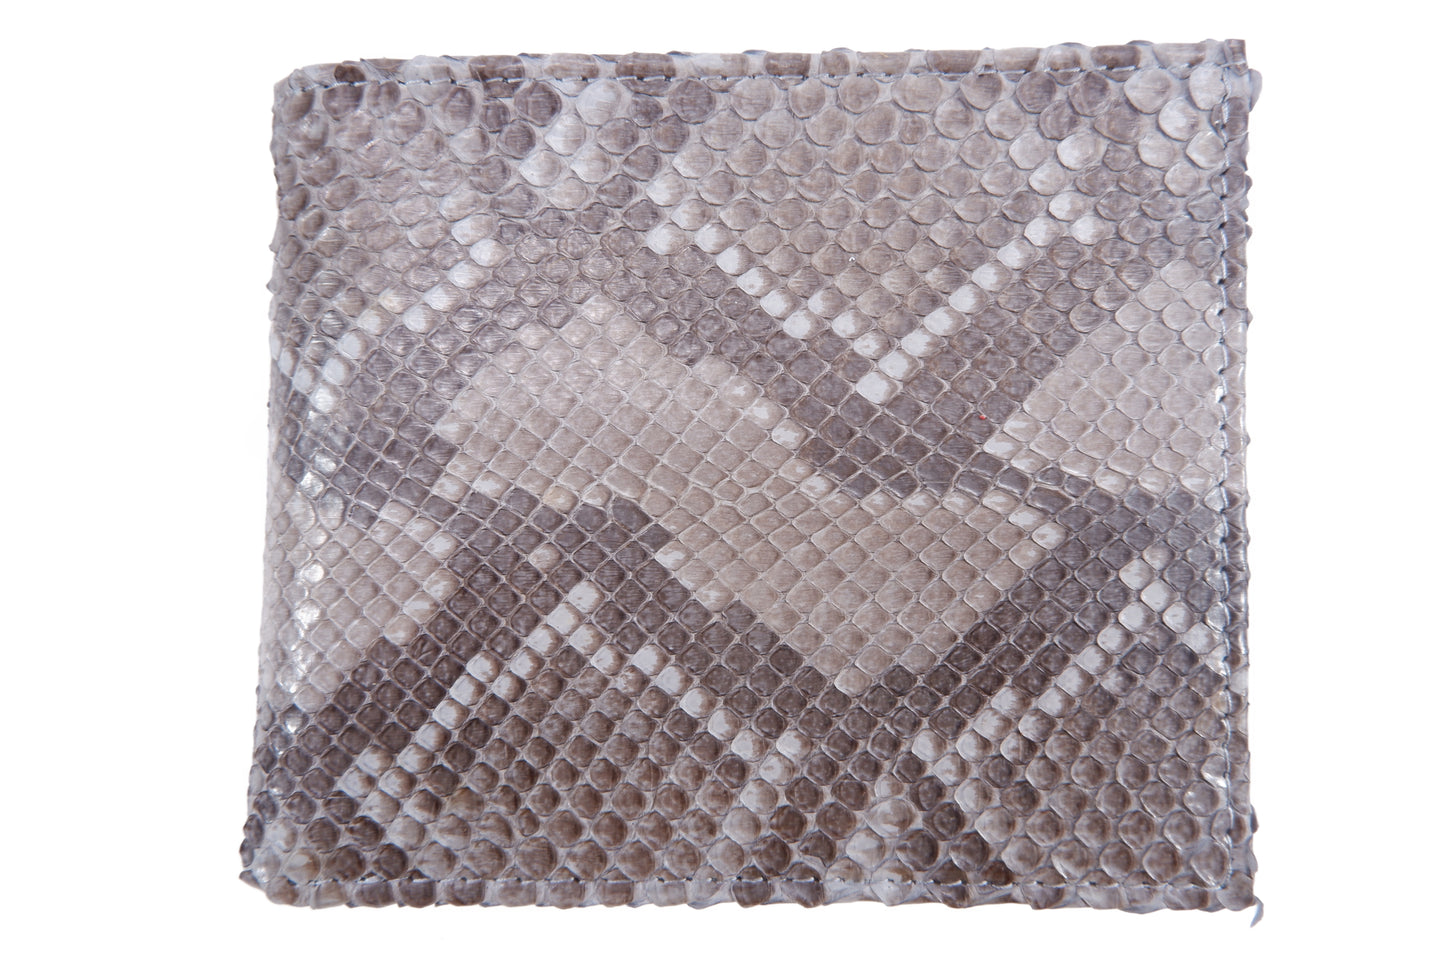 Genuine Reticulated Python Snake Skin Soft Bifold Wallet